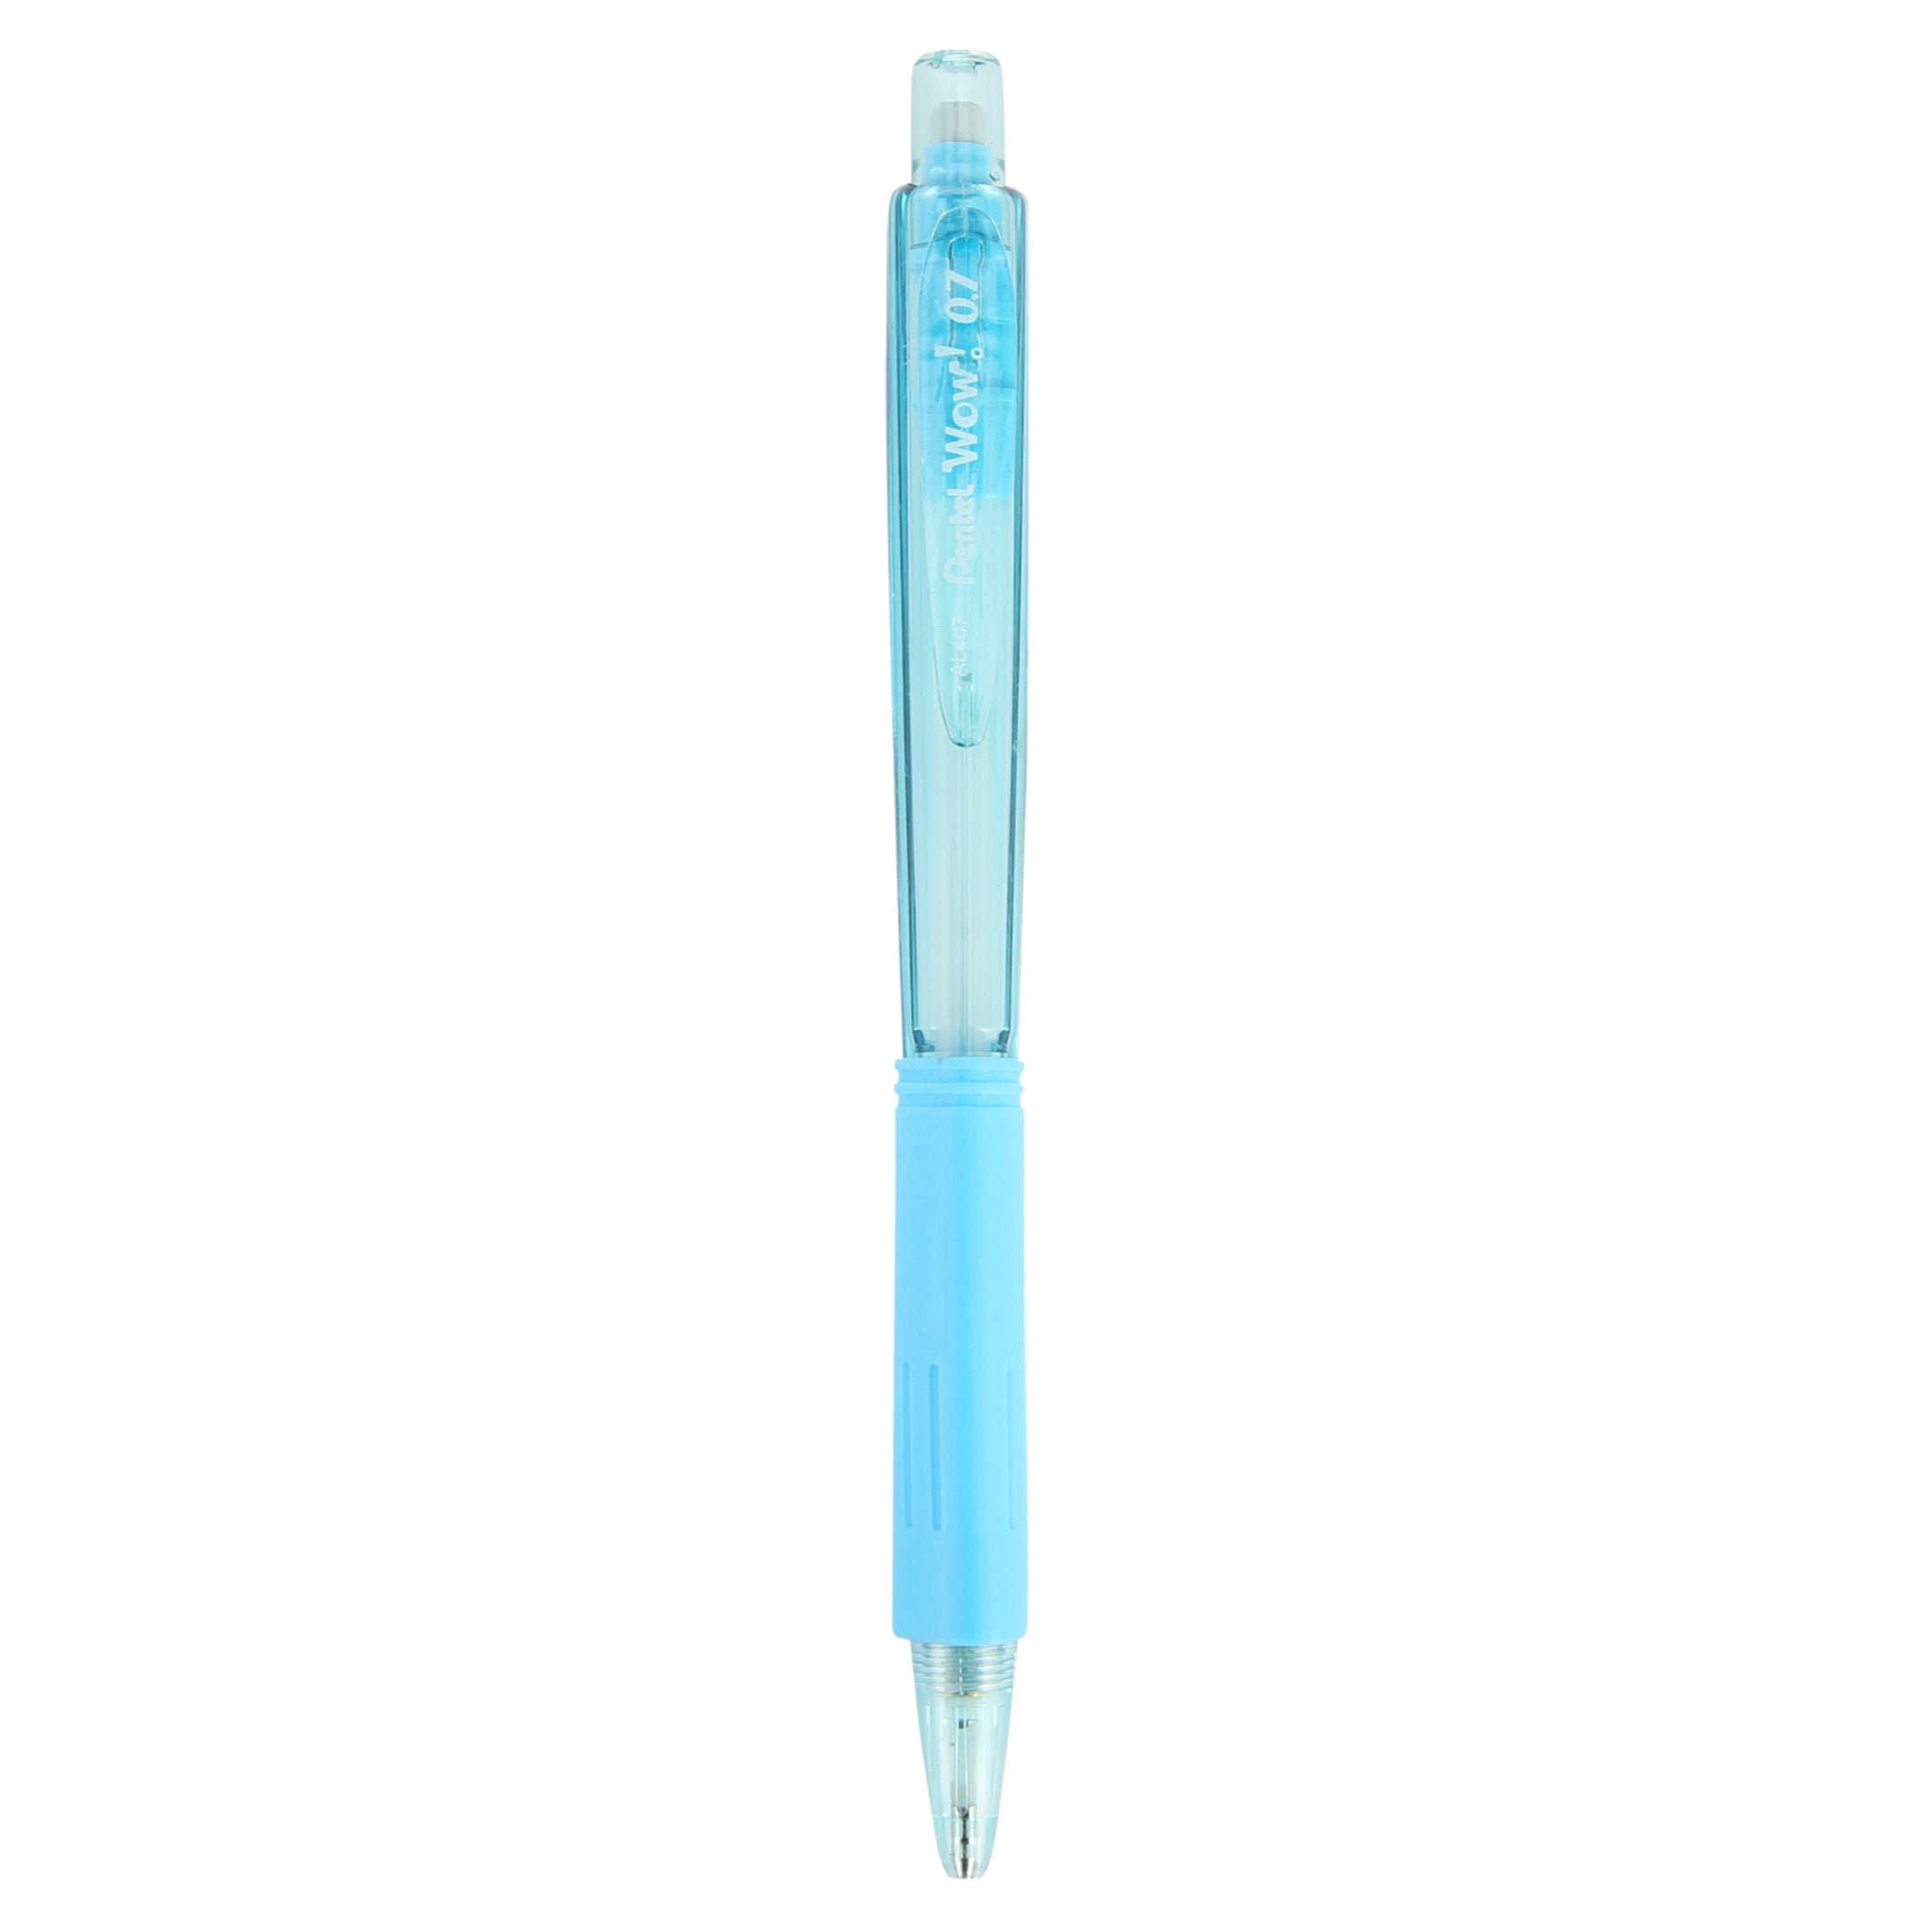 Color Pen®, 18 Pack — Pentel of America, Ltd.